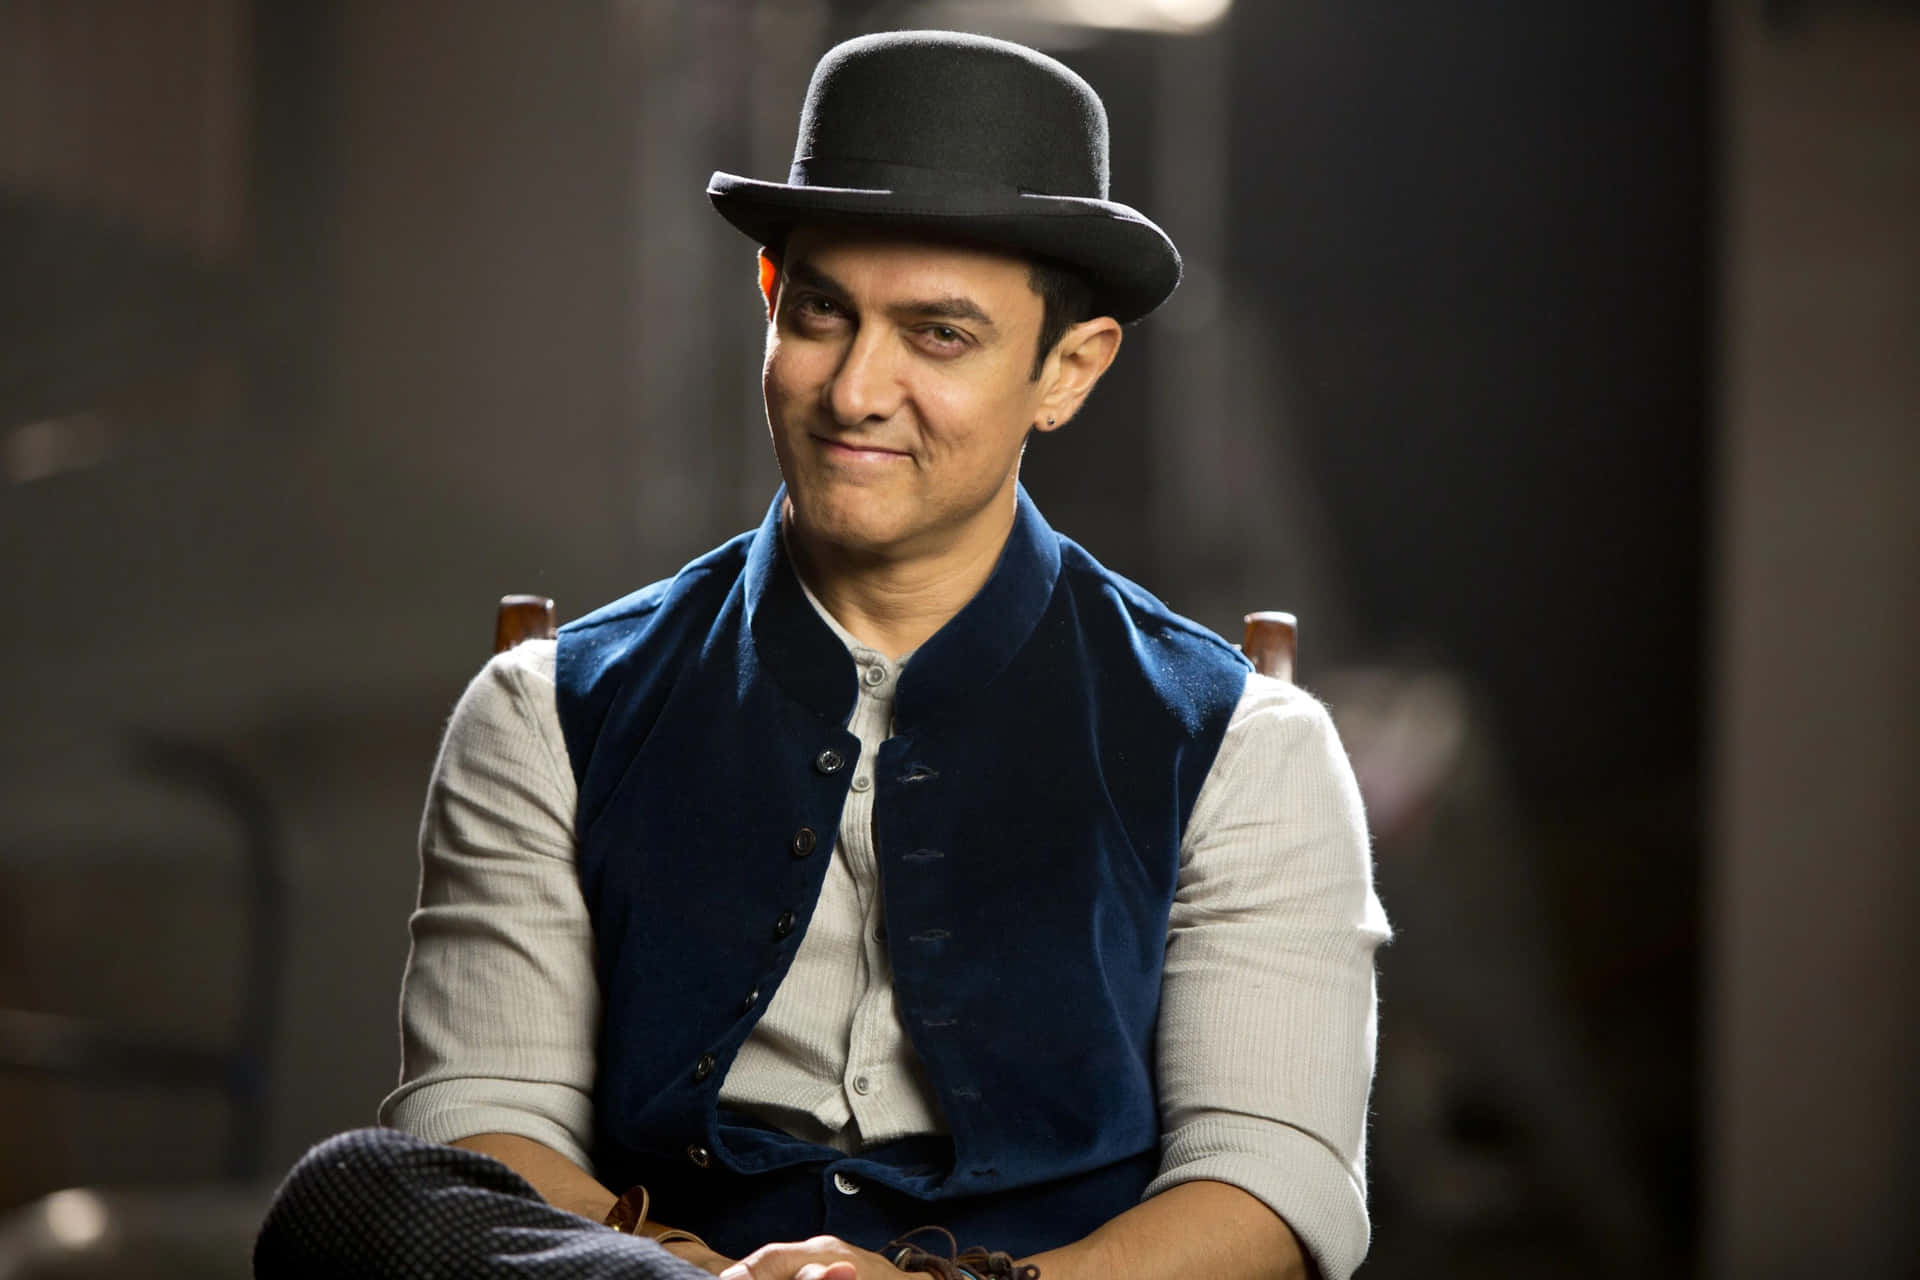 “Aamir Khan: The King Of Bollywood”